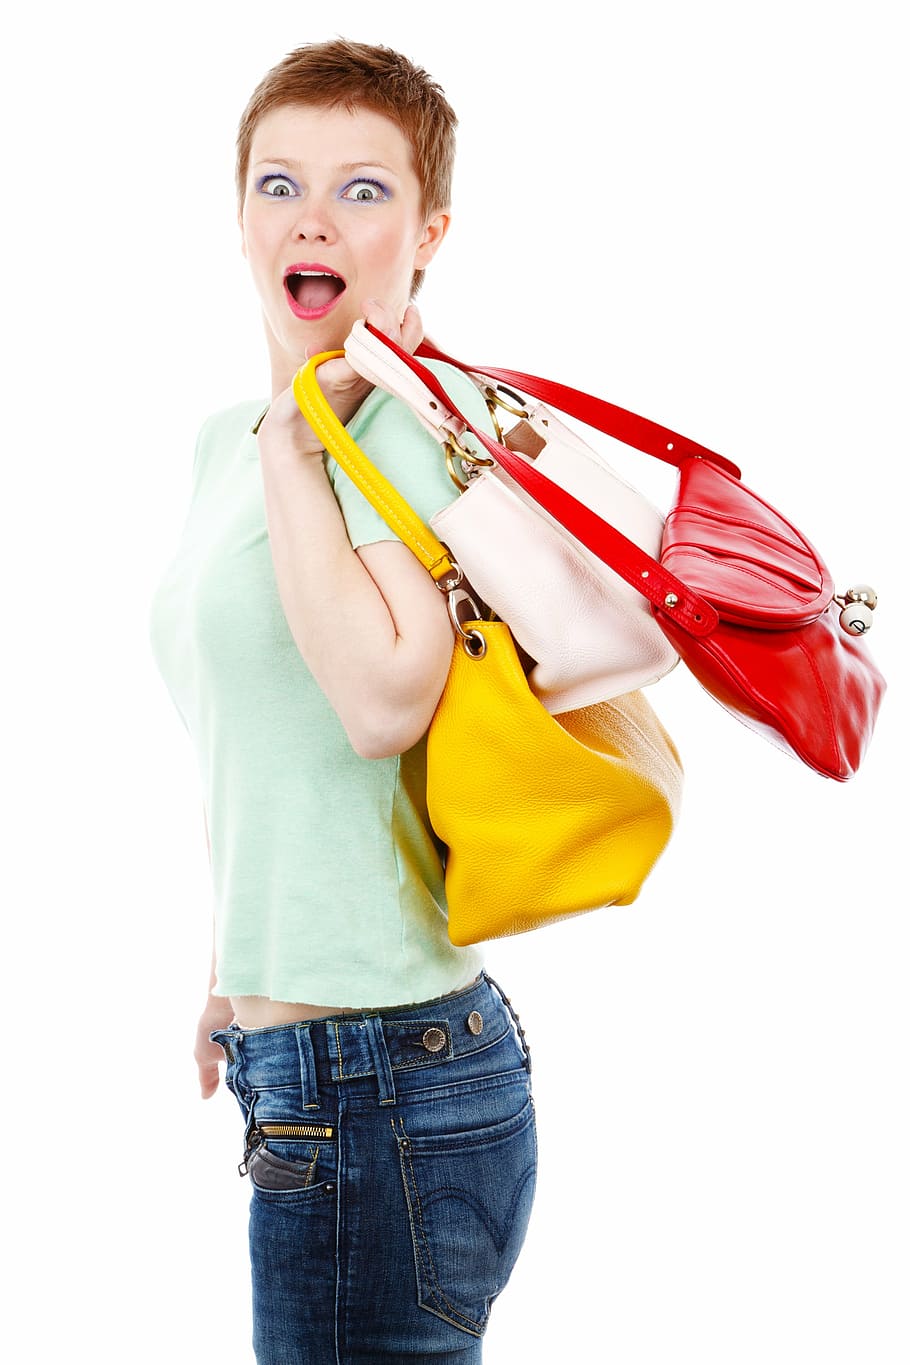 woman, teal polo shirt, denim bottoms, holding, bags, adult, bag, buy, buyer, consumer